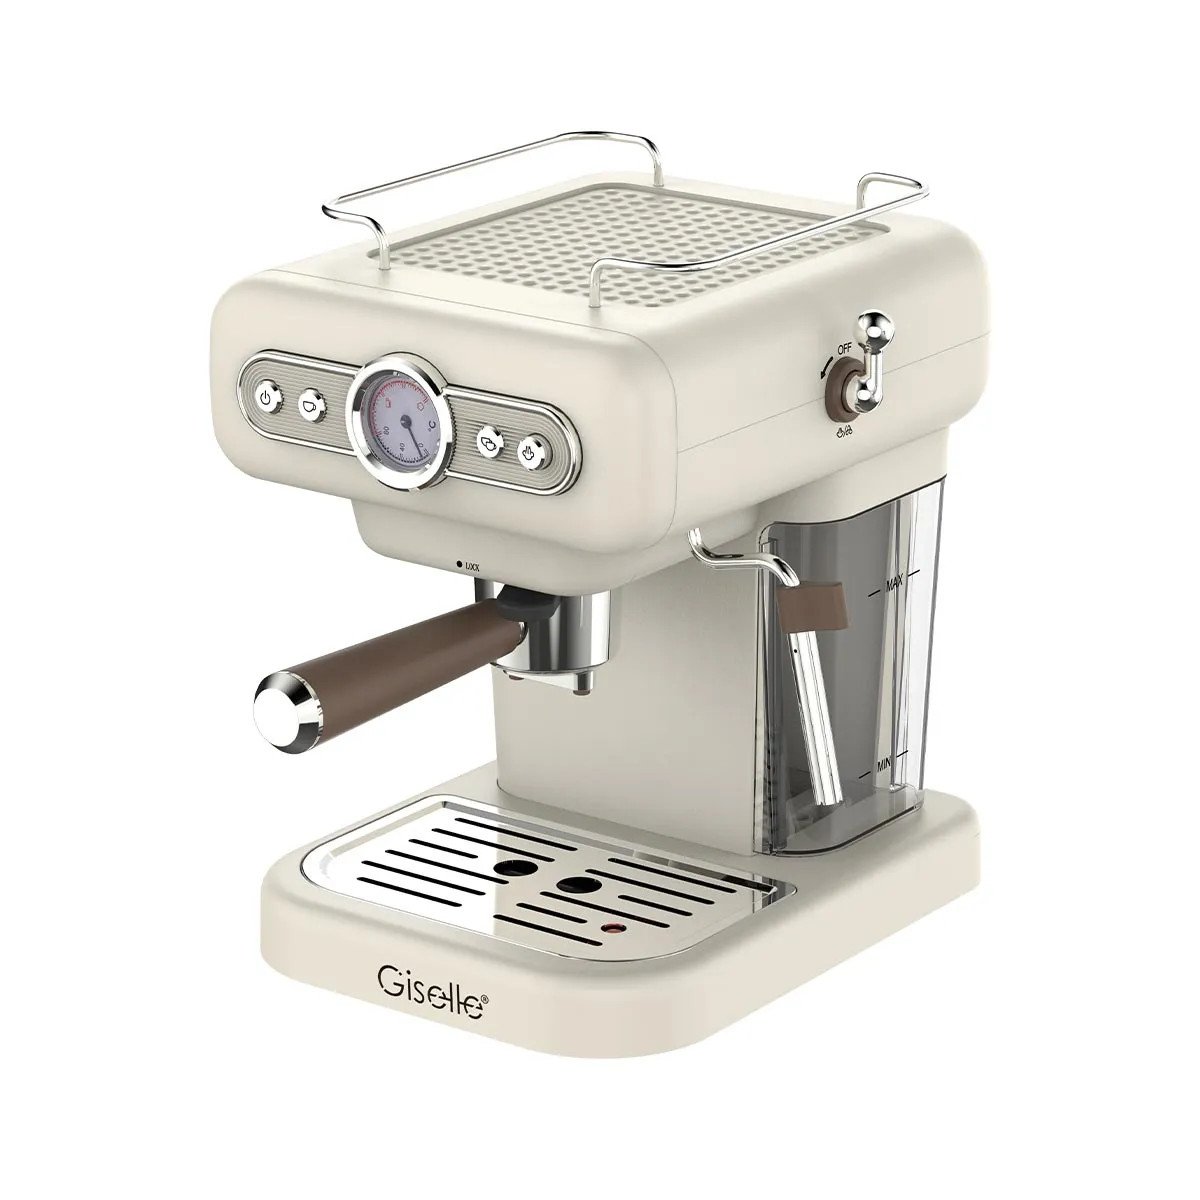 Giselle Automatic Espresso Milk Froth Coffee Machine